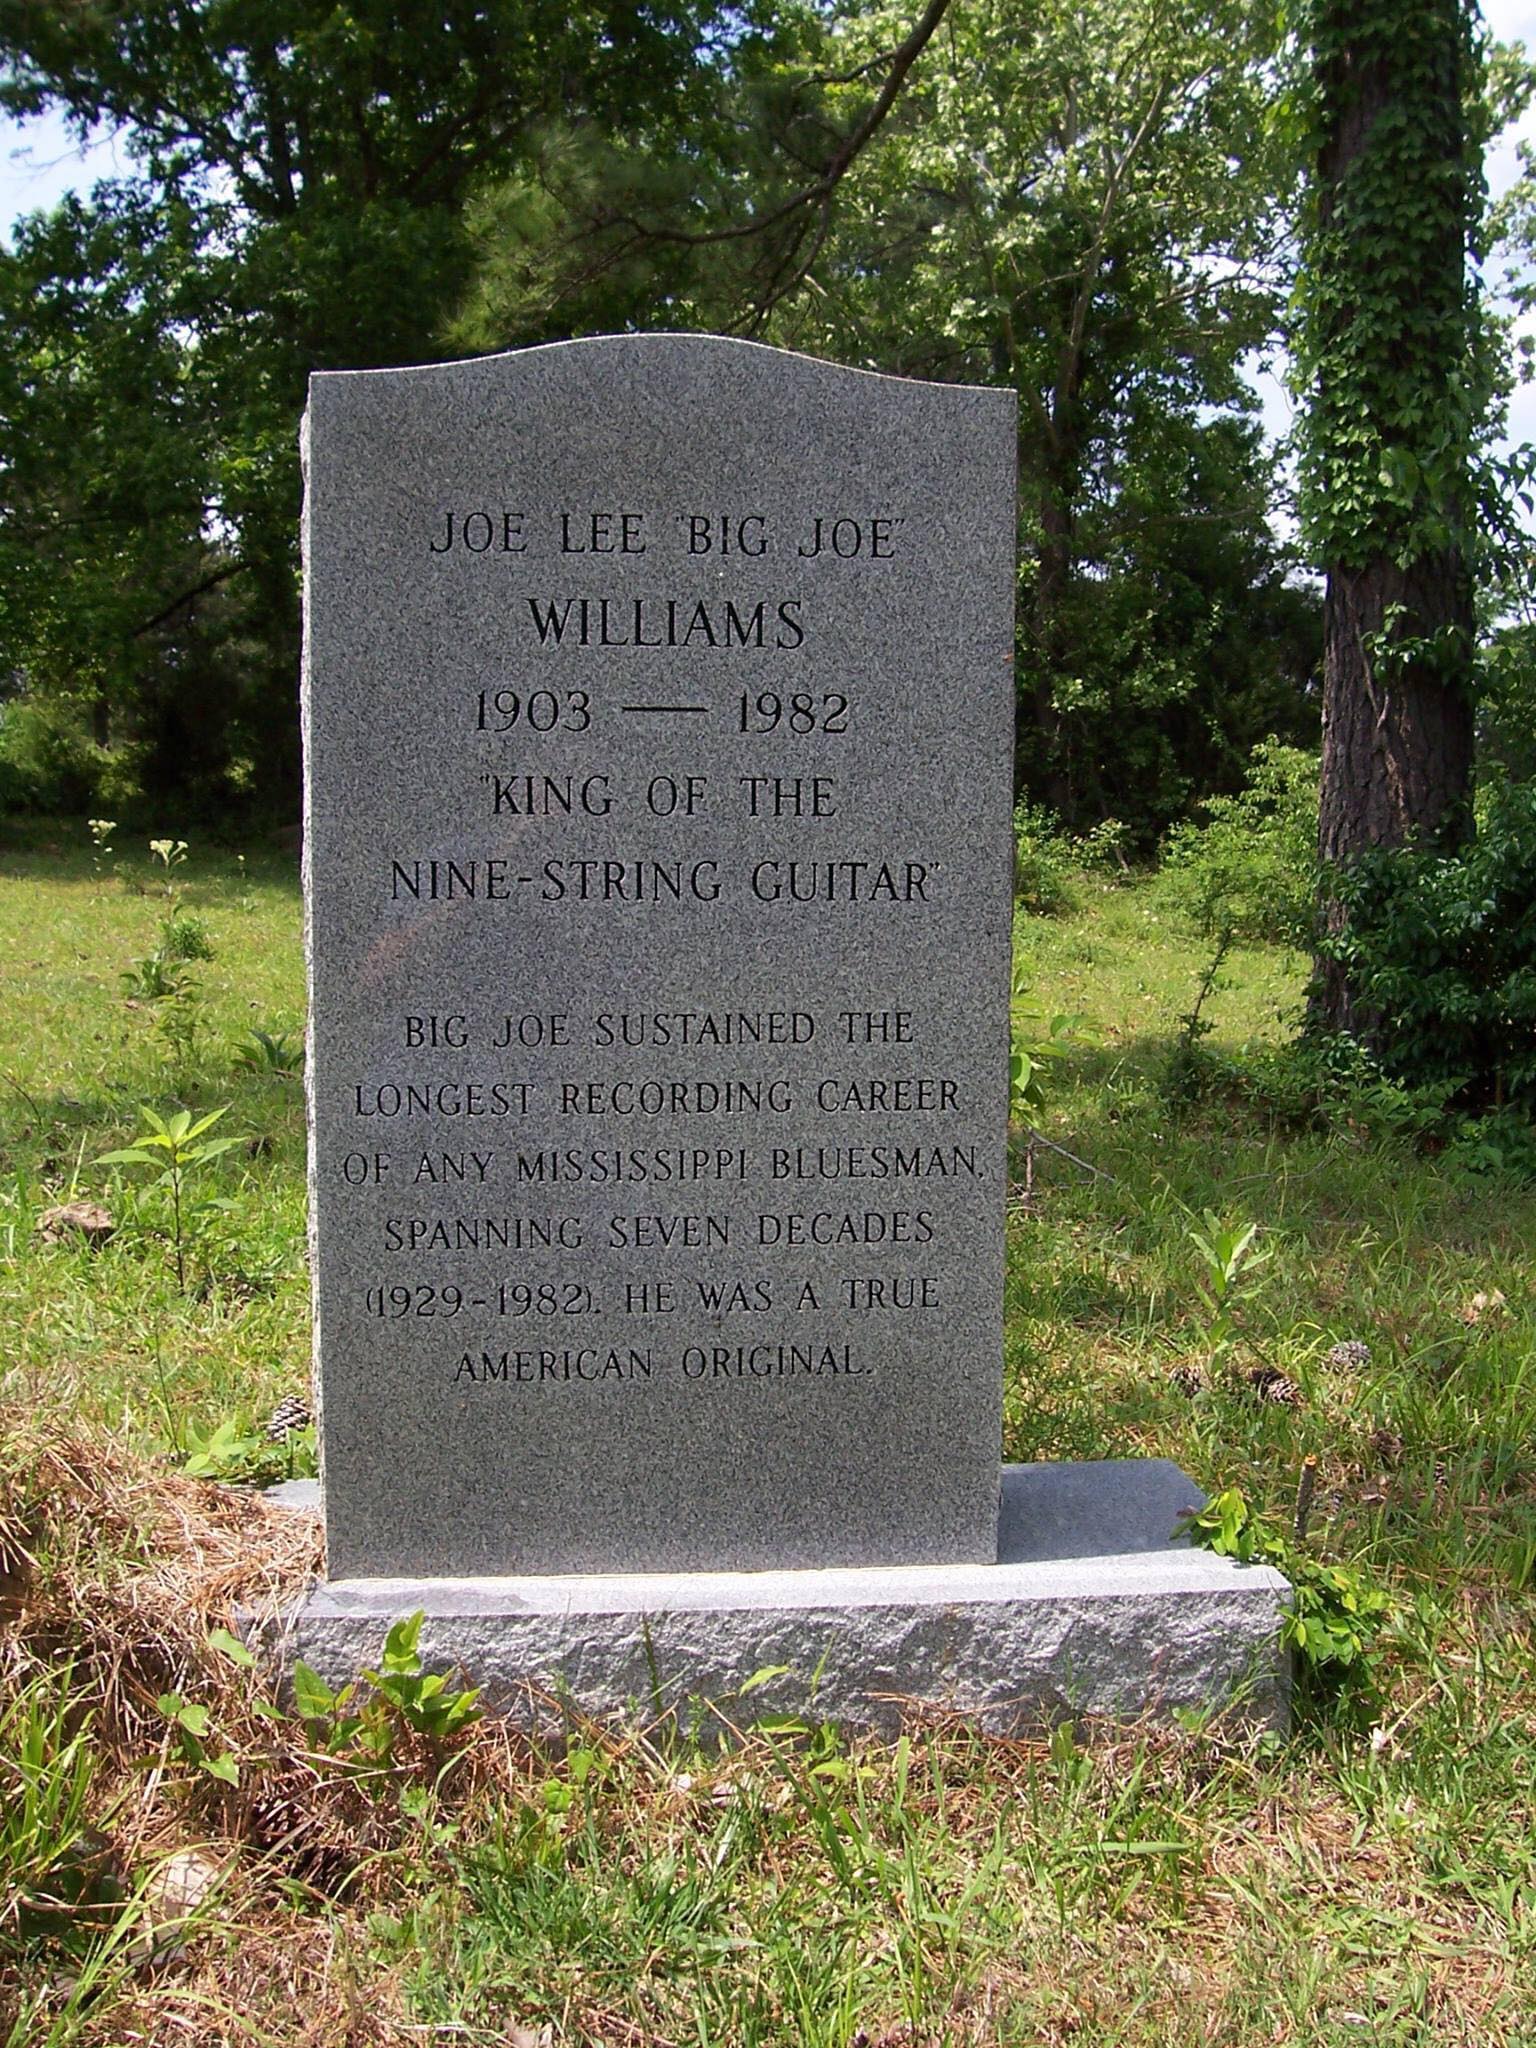 Big Joe's headstone